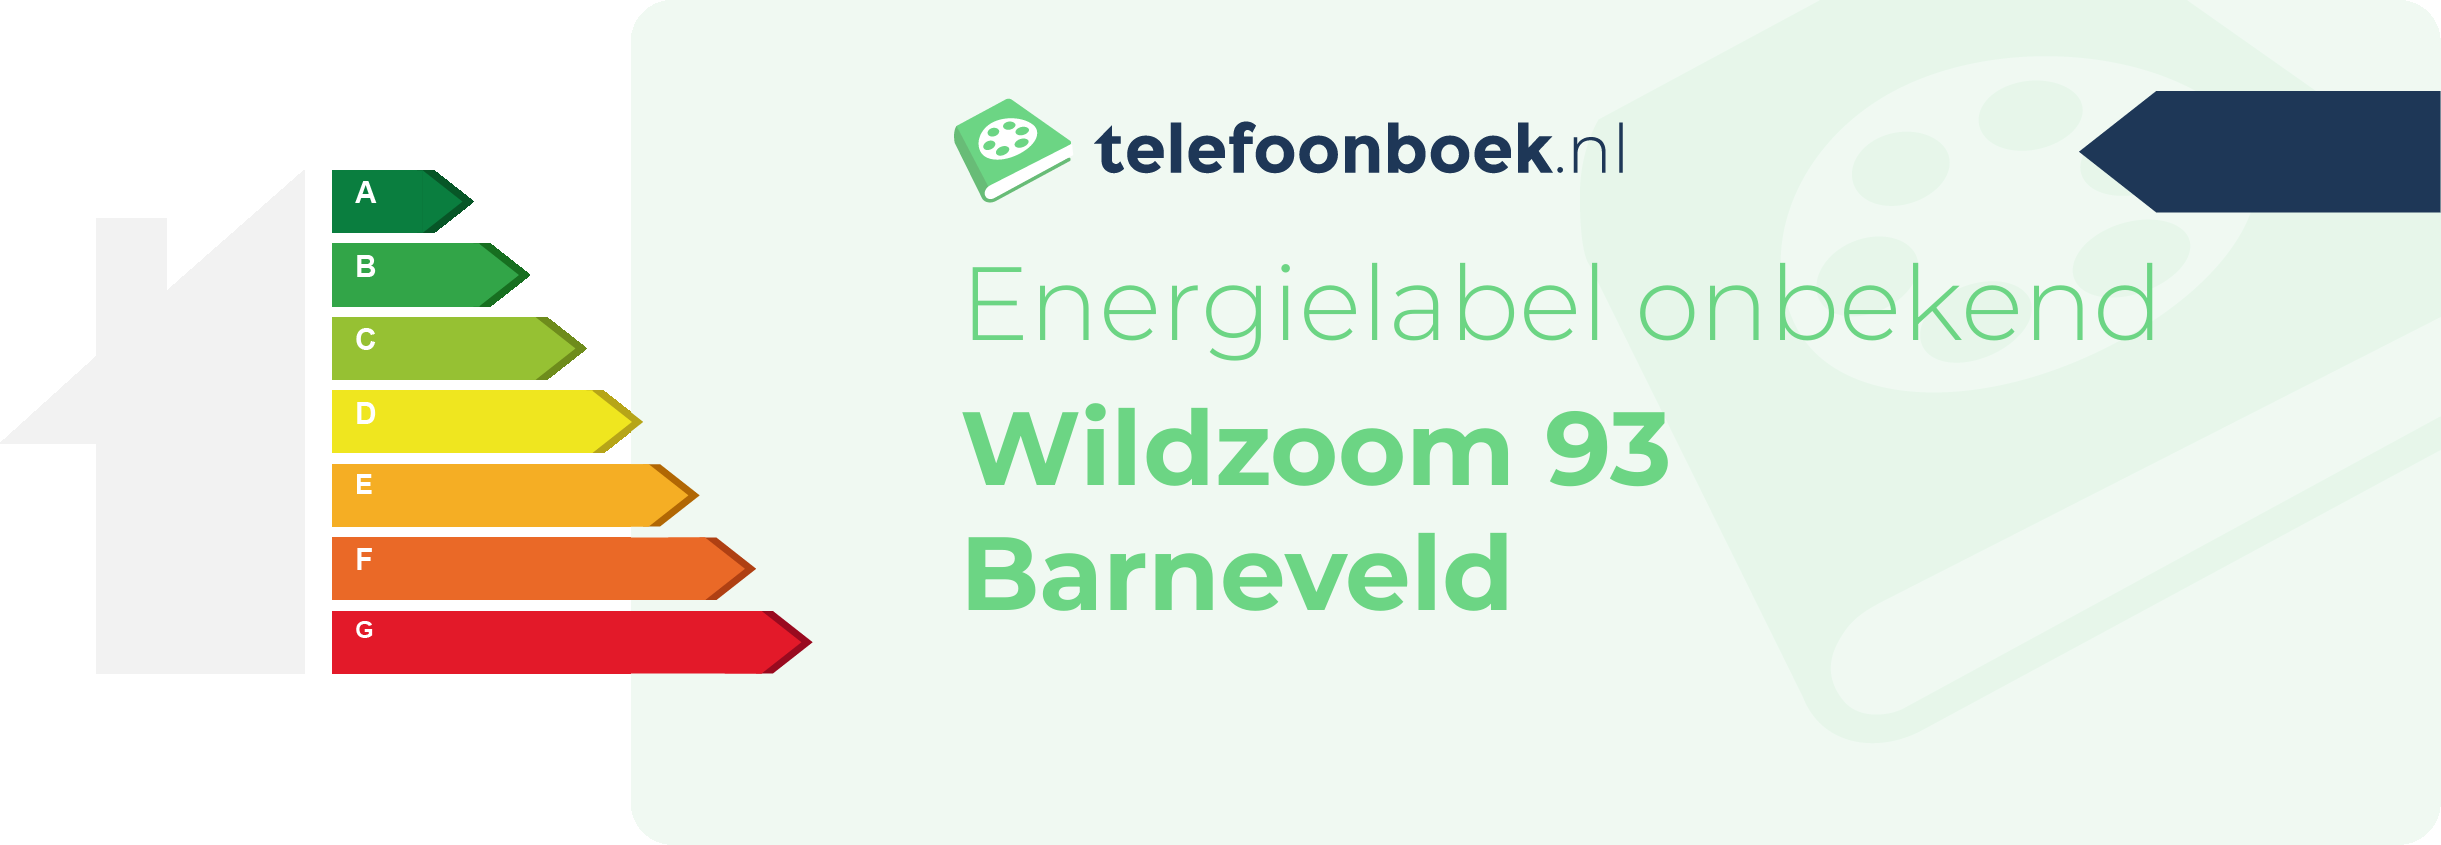 Energielabel Wildzoom 93 Barneveld